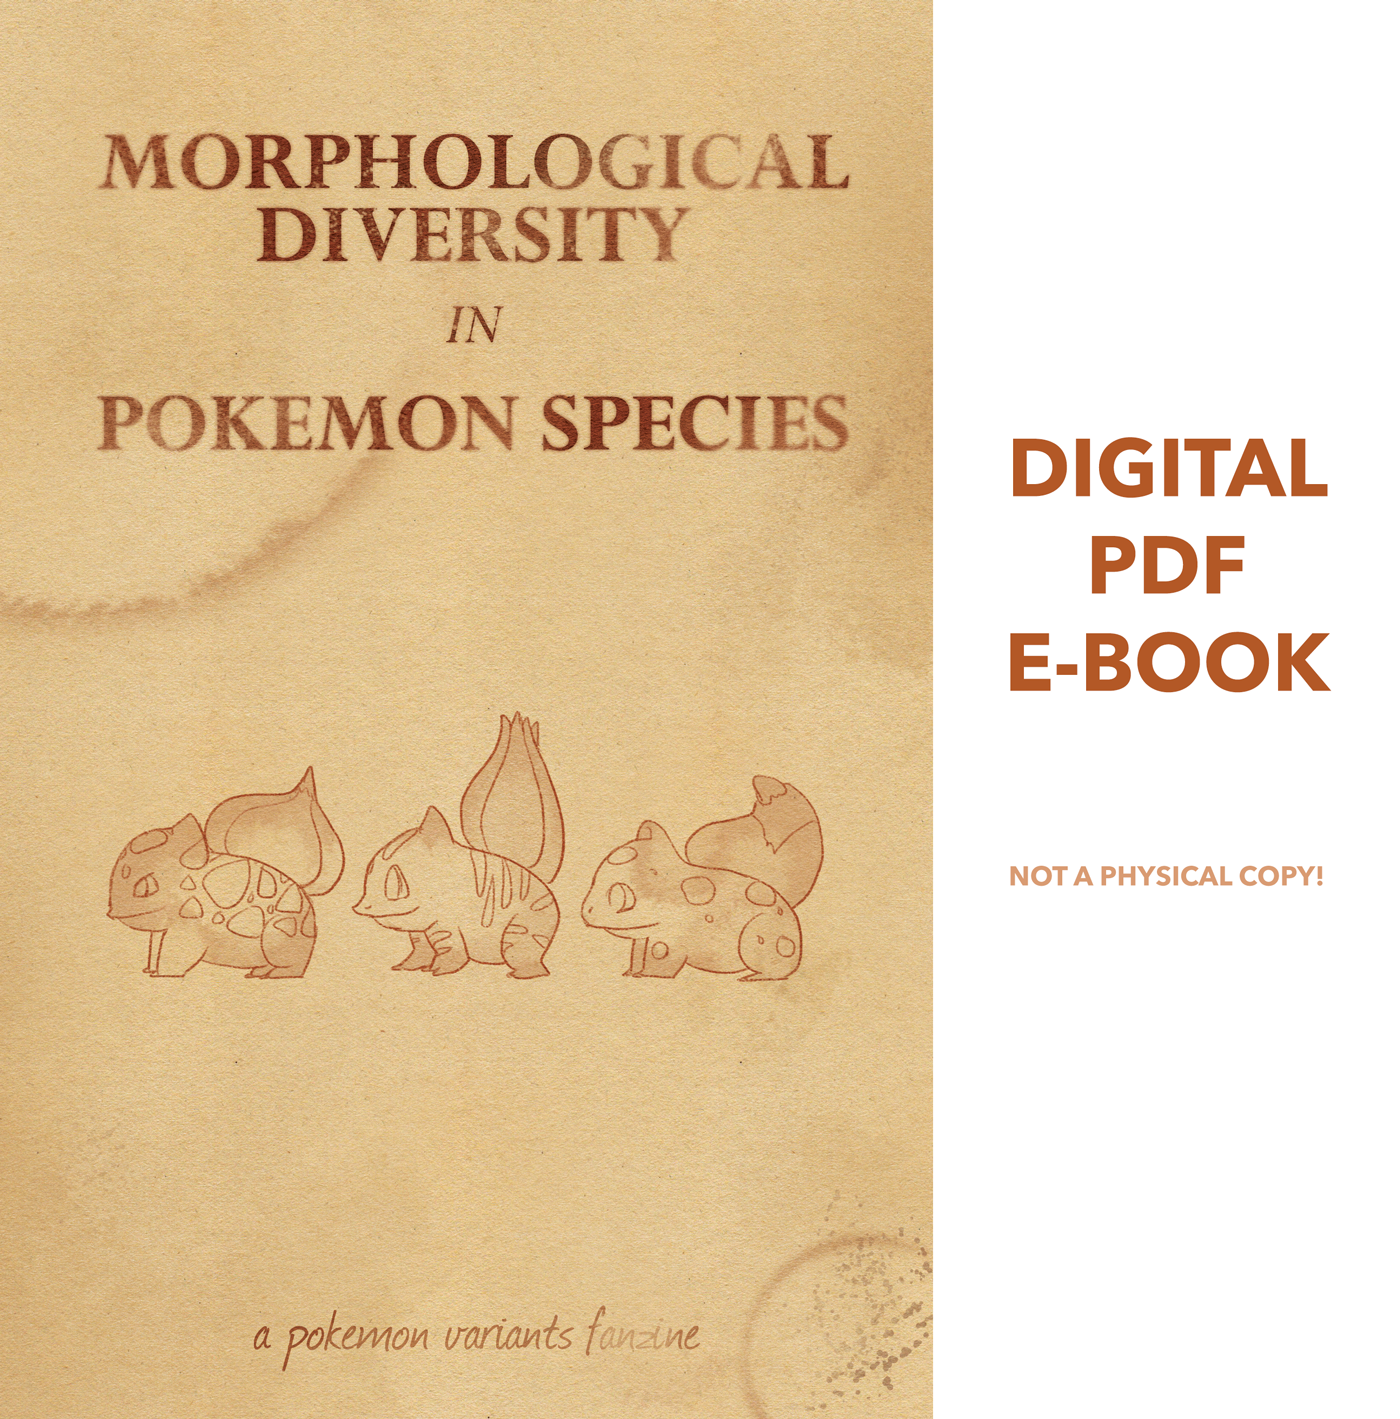 The entomological diversity of Pokémon